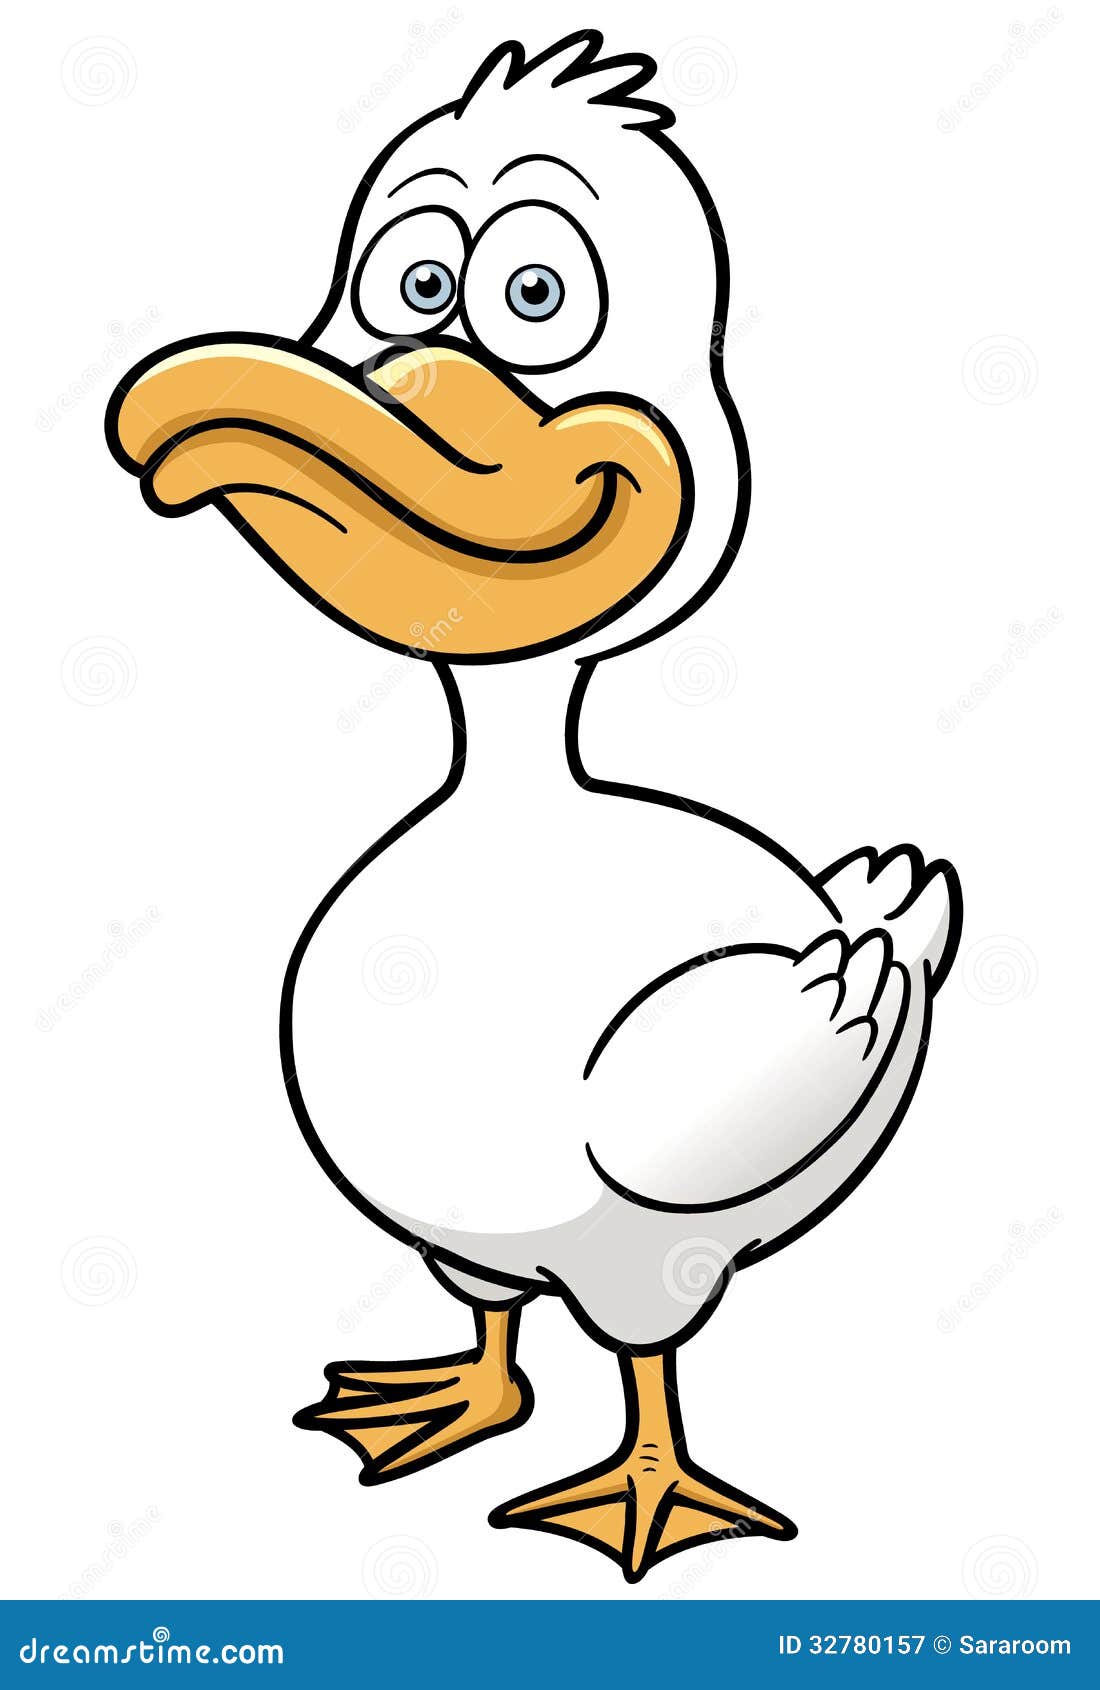 Duck Cartoon Royalty Free Stock Photography - Image: 32780157